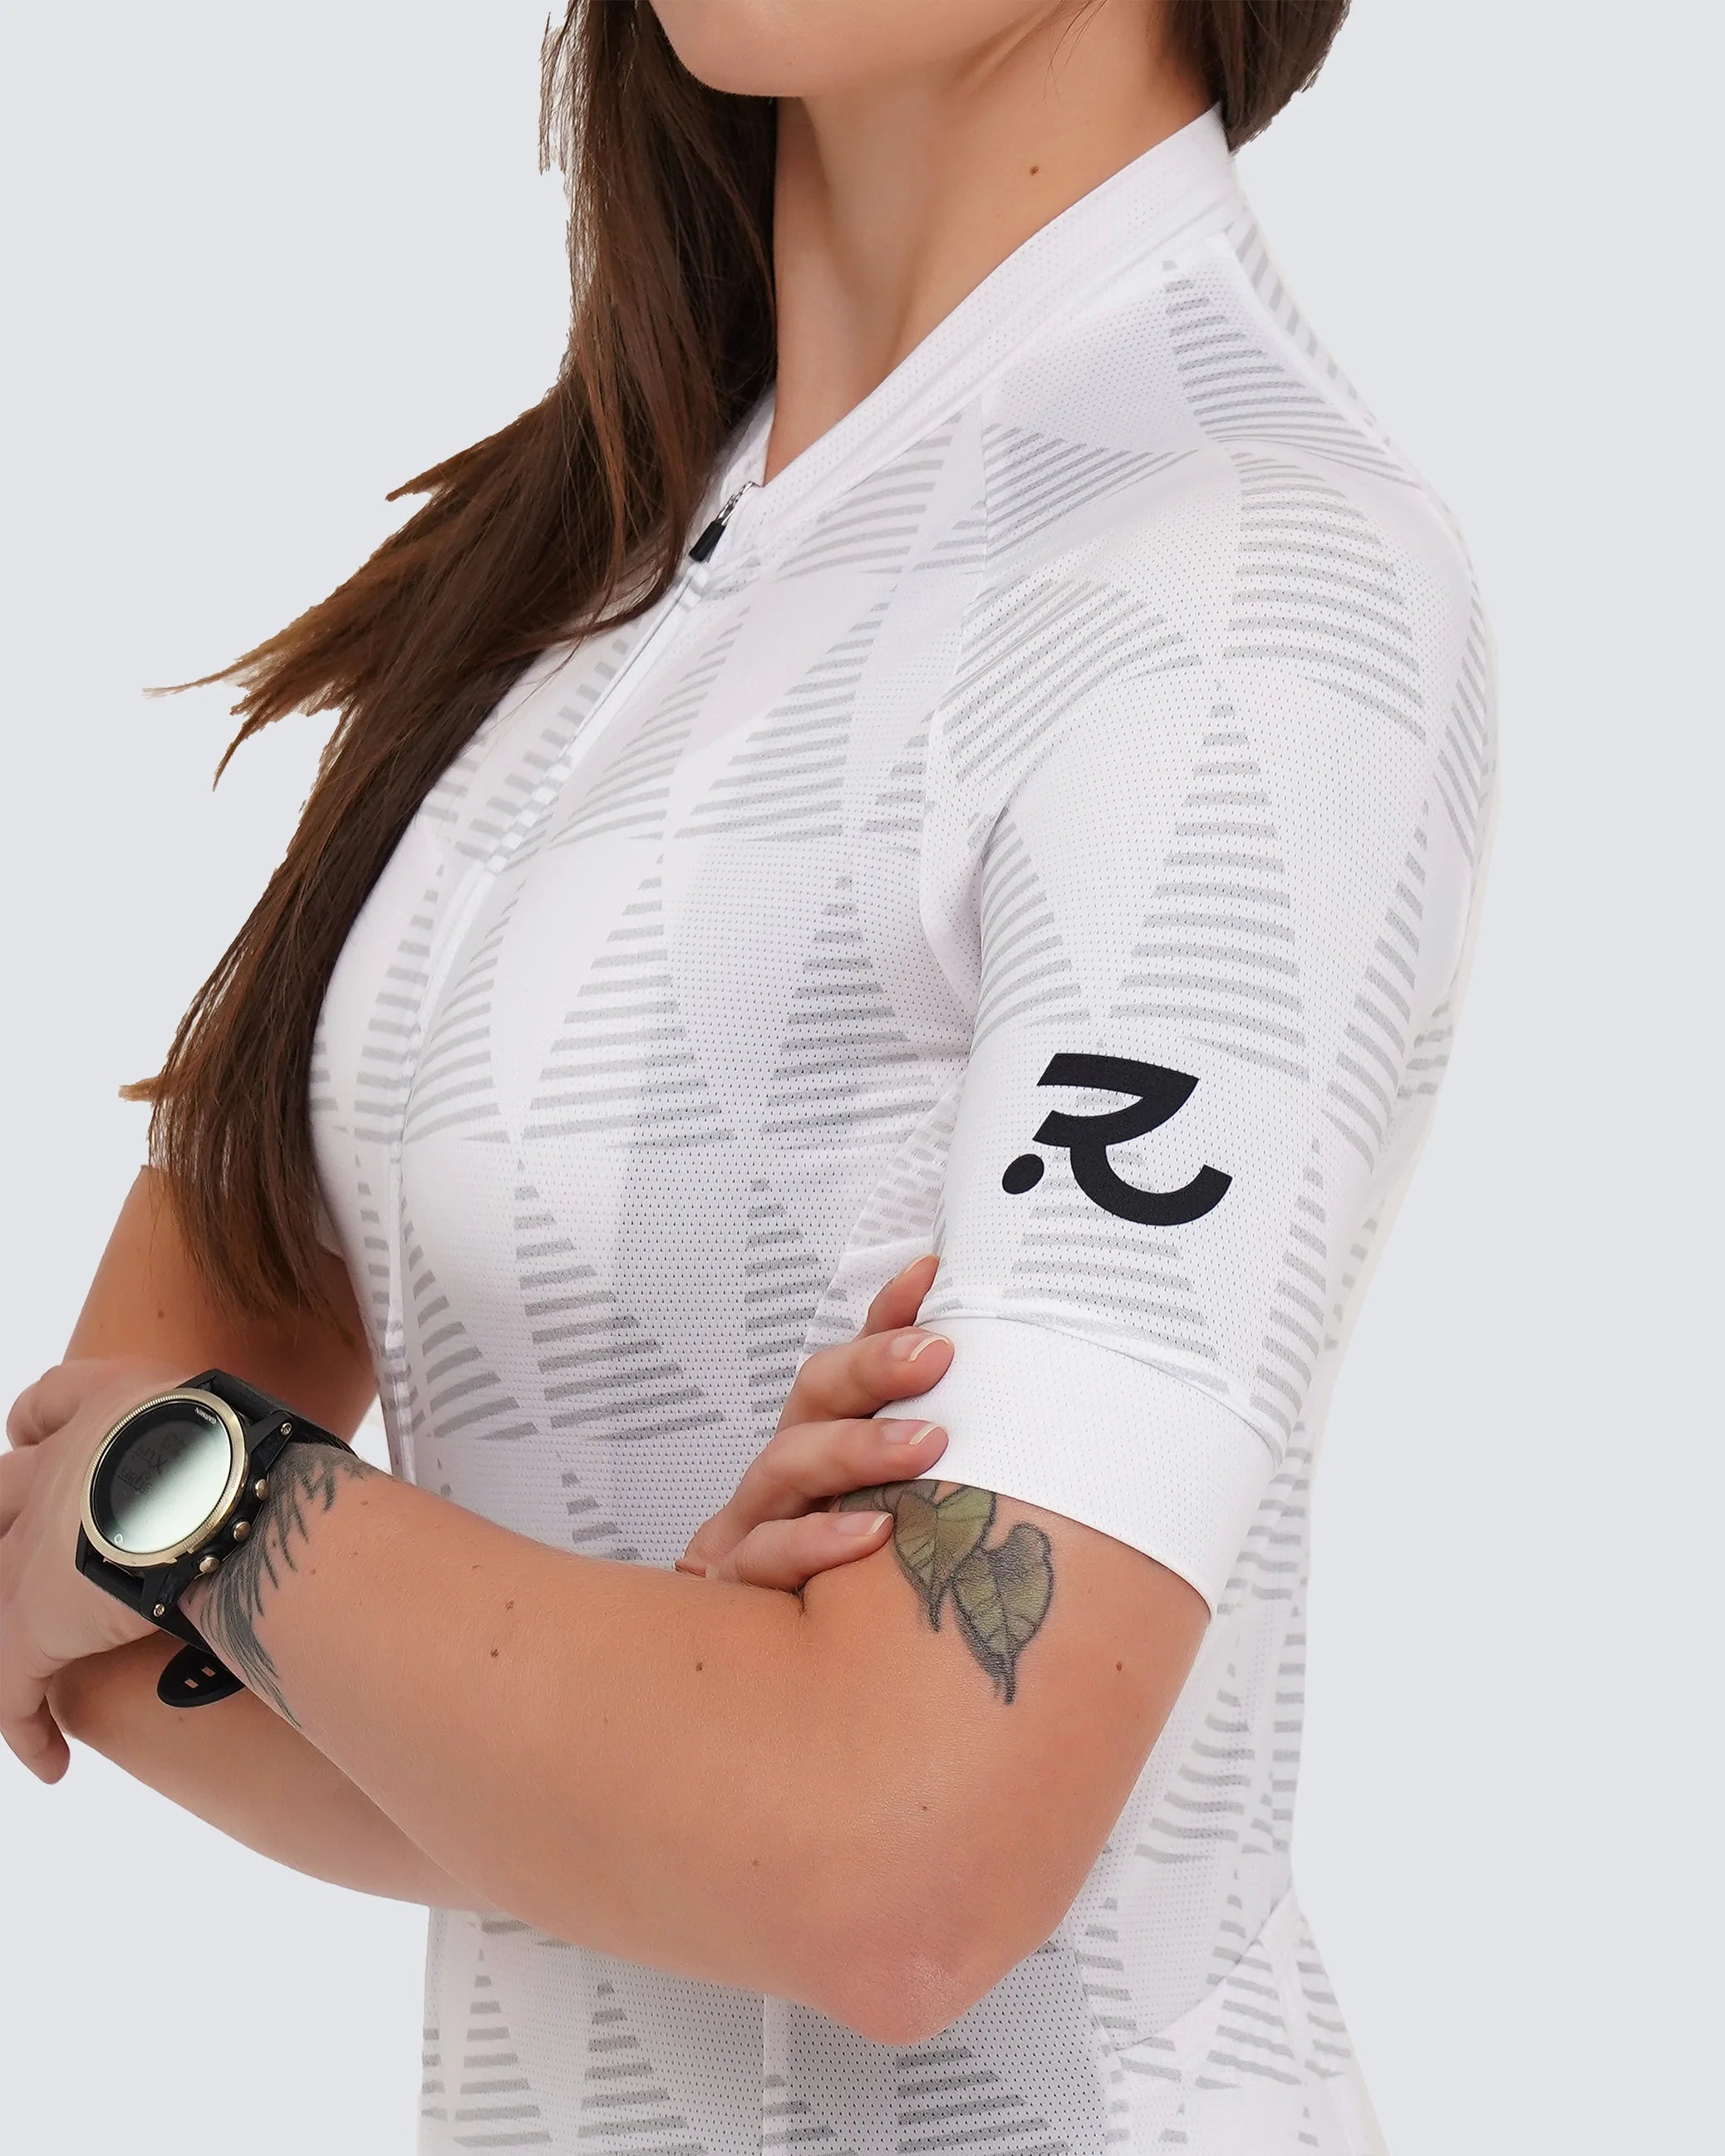 Camiseta personalizada Triathlon Buddies - Mujer